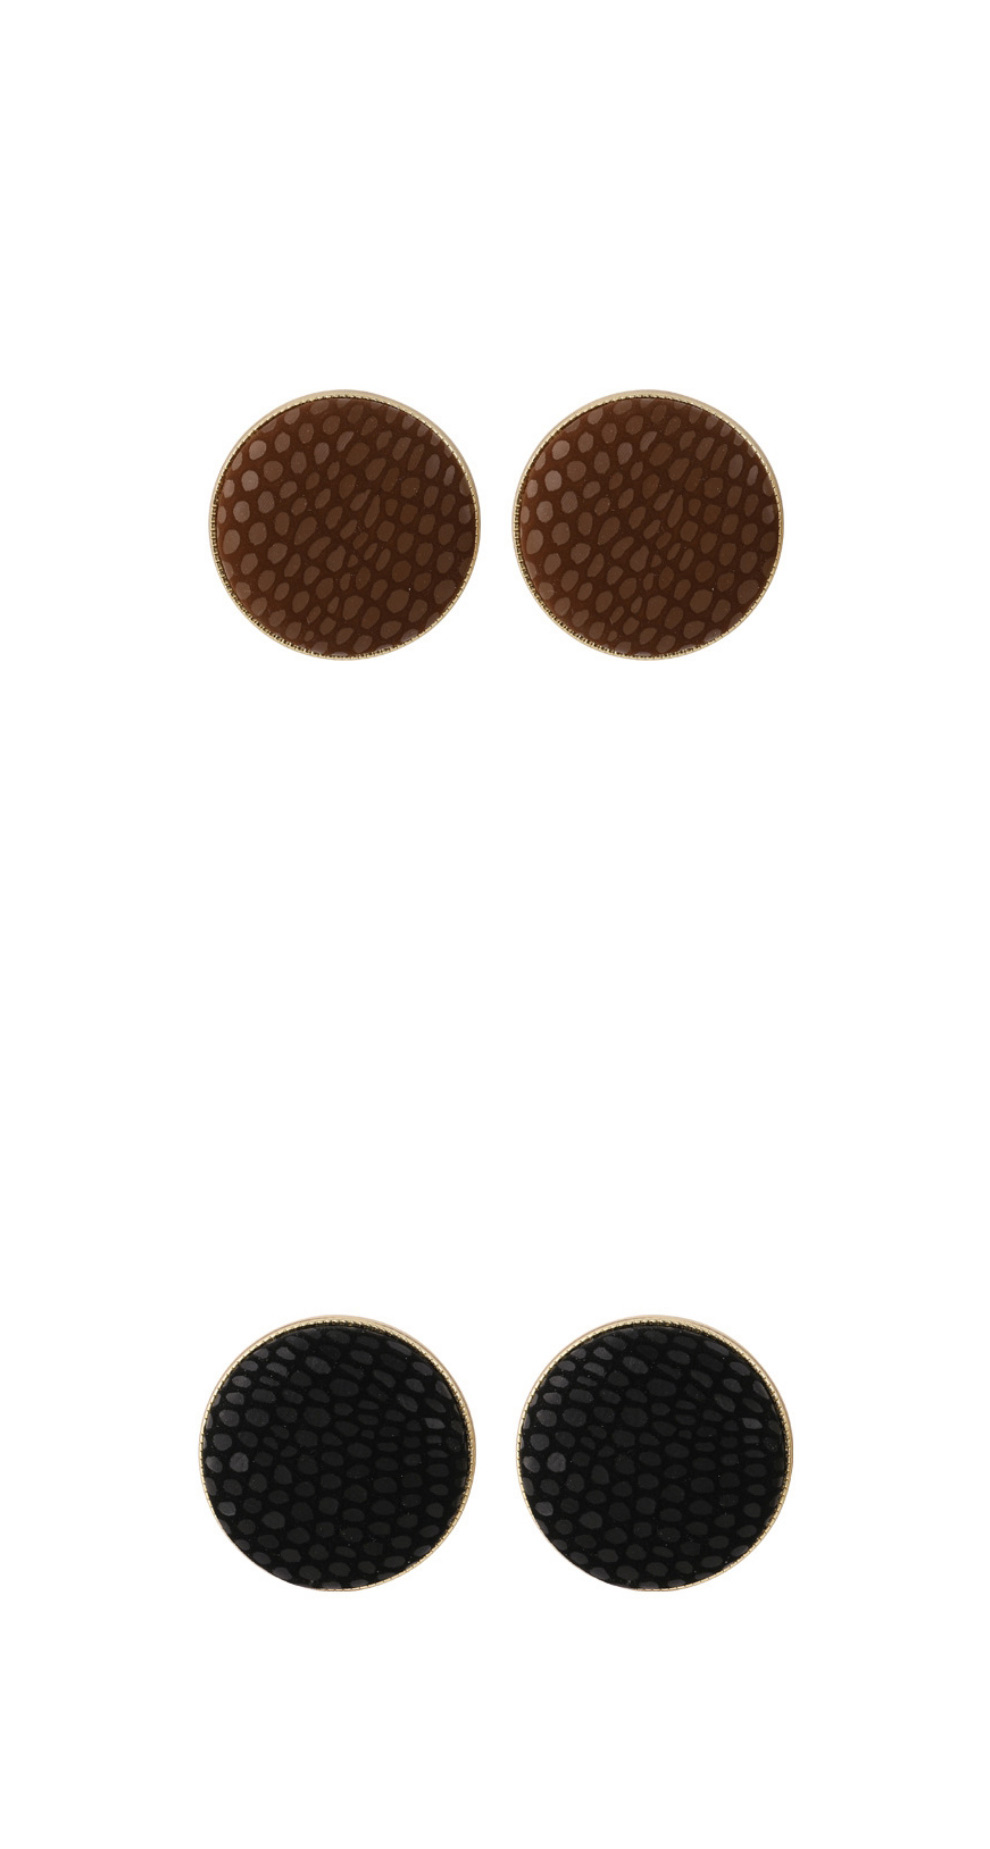 Fashion Black Alloy Leather Round Earrings,Stud Earrings